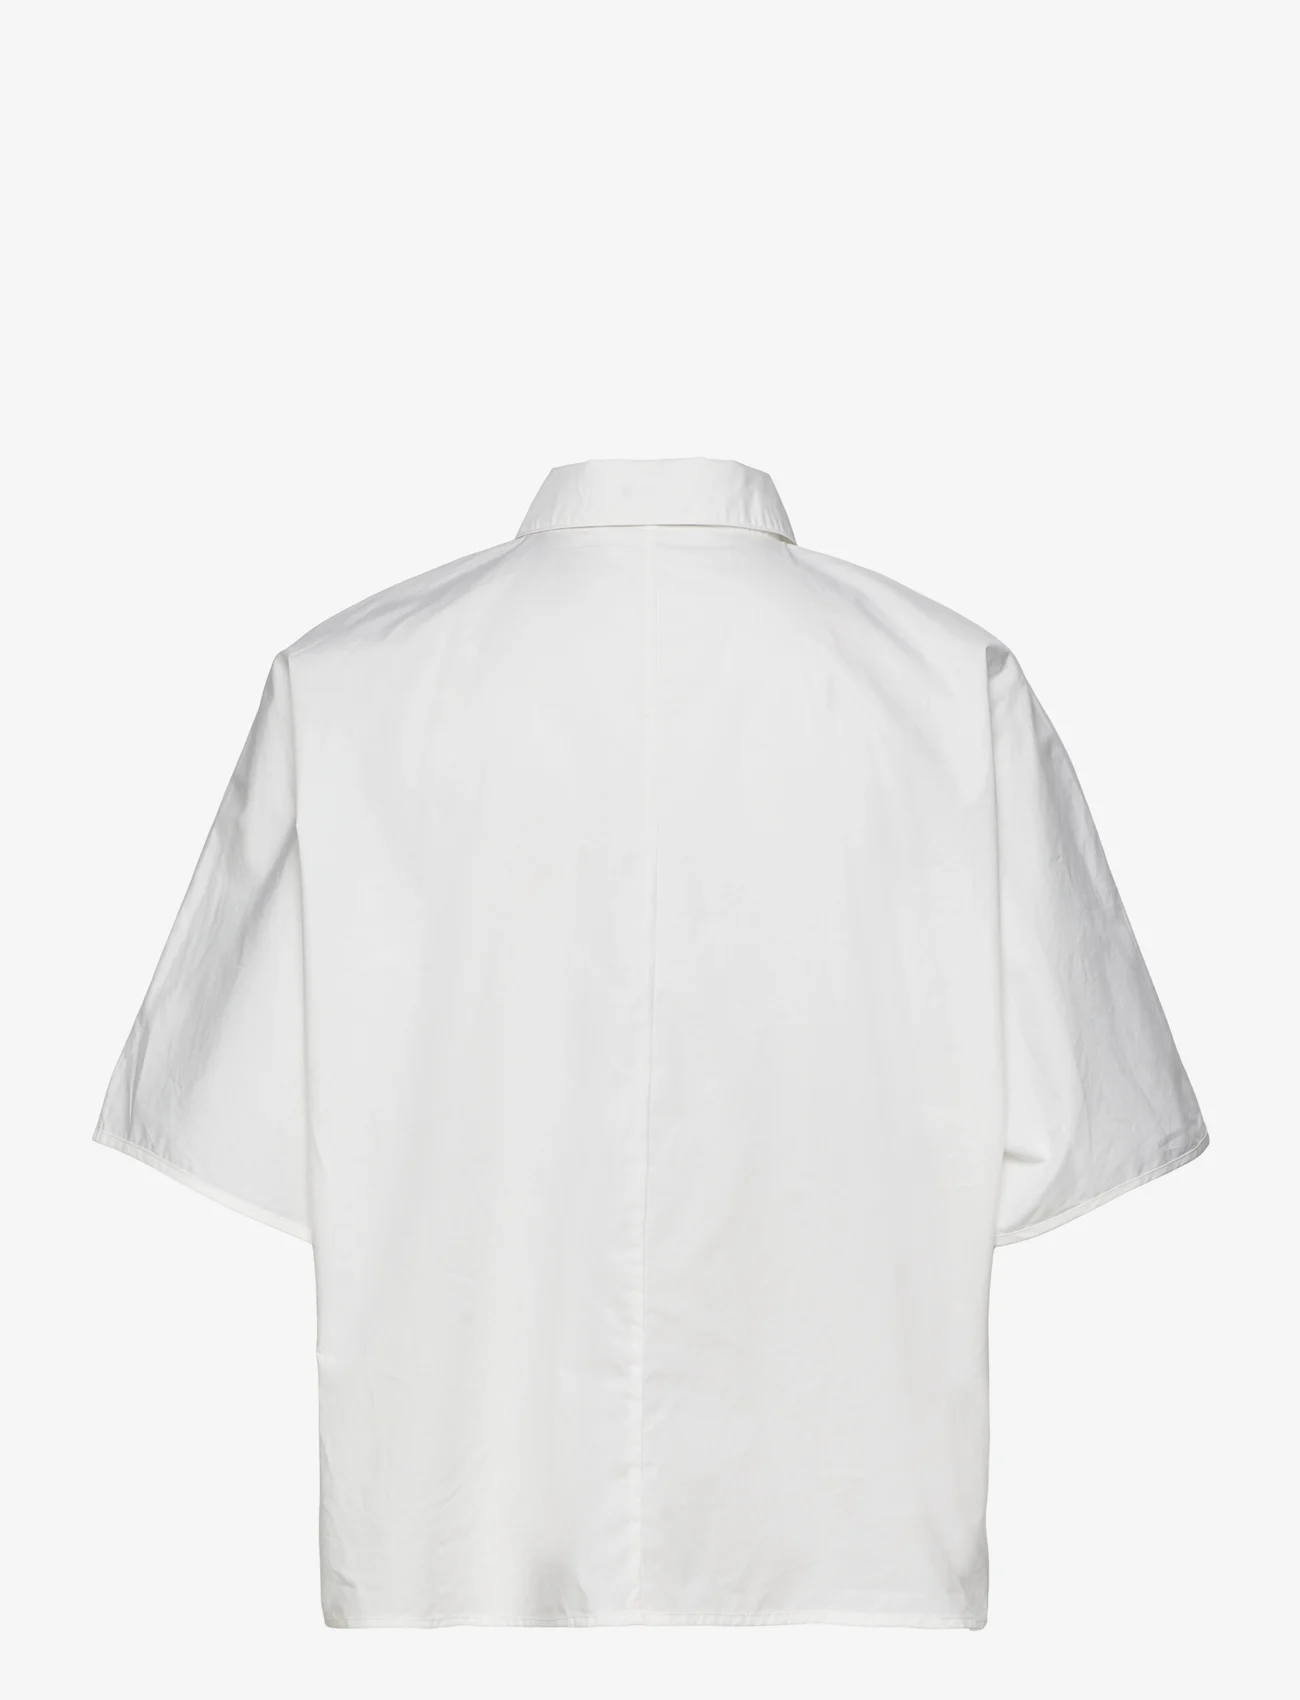 MOS MOSH - Lowana Cotton Blouse - short-sleeved blouses - white - 1